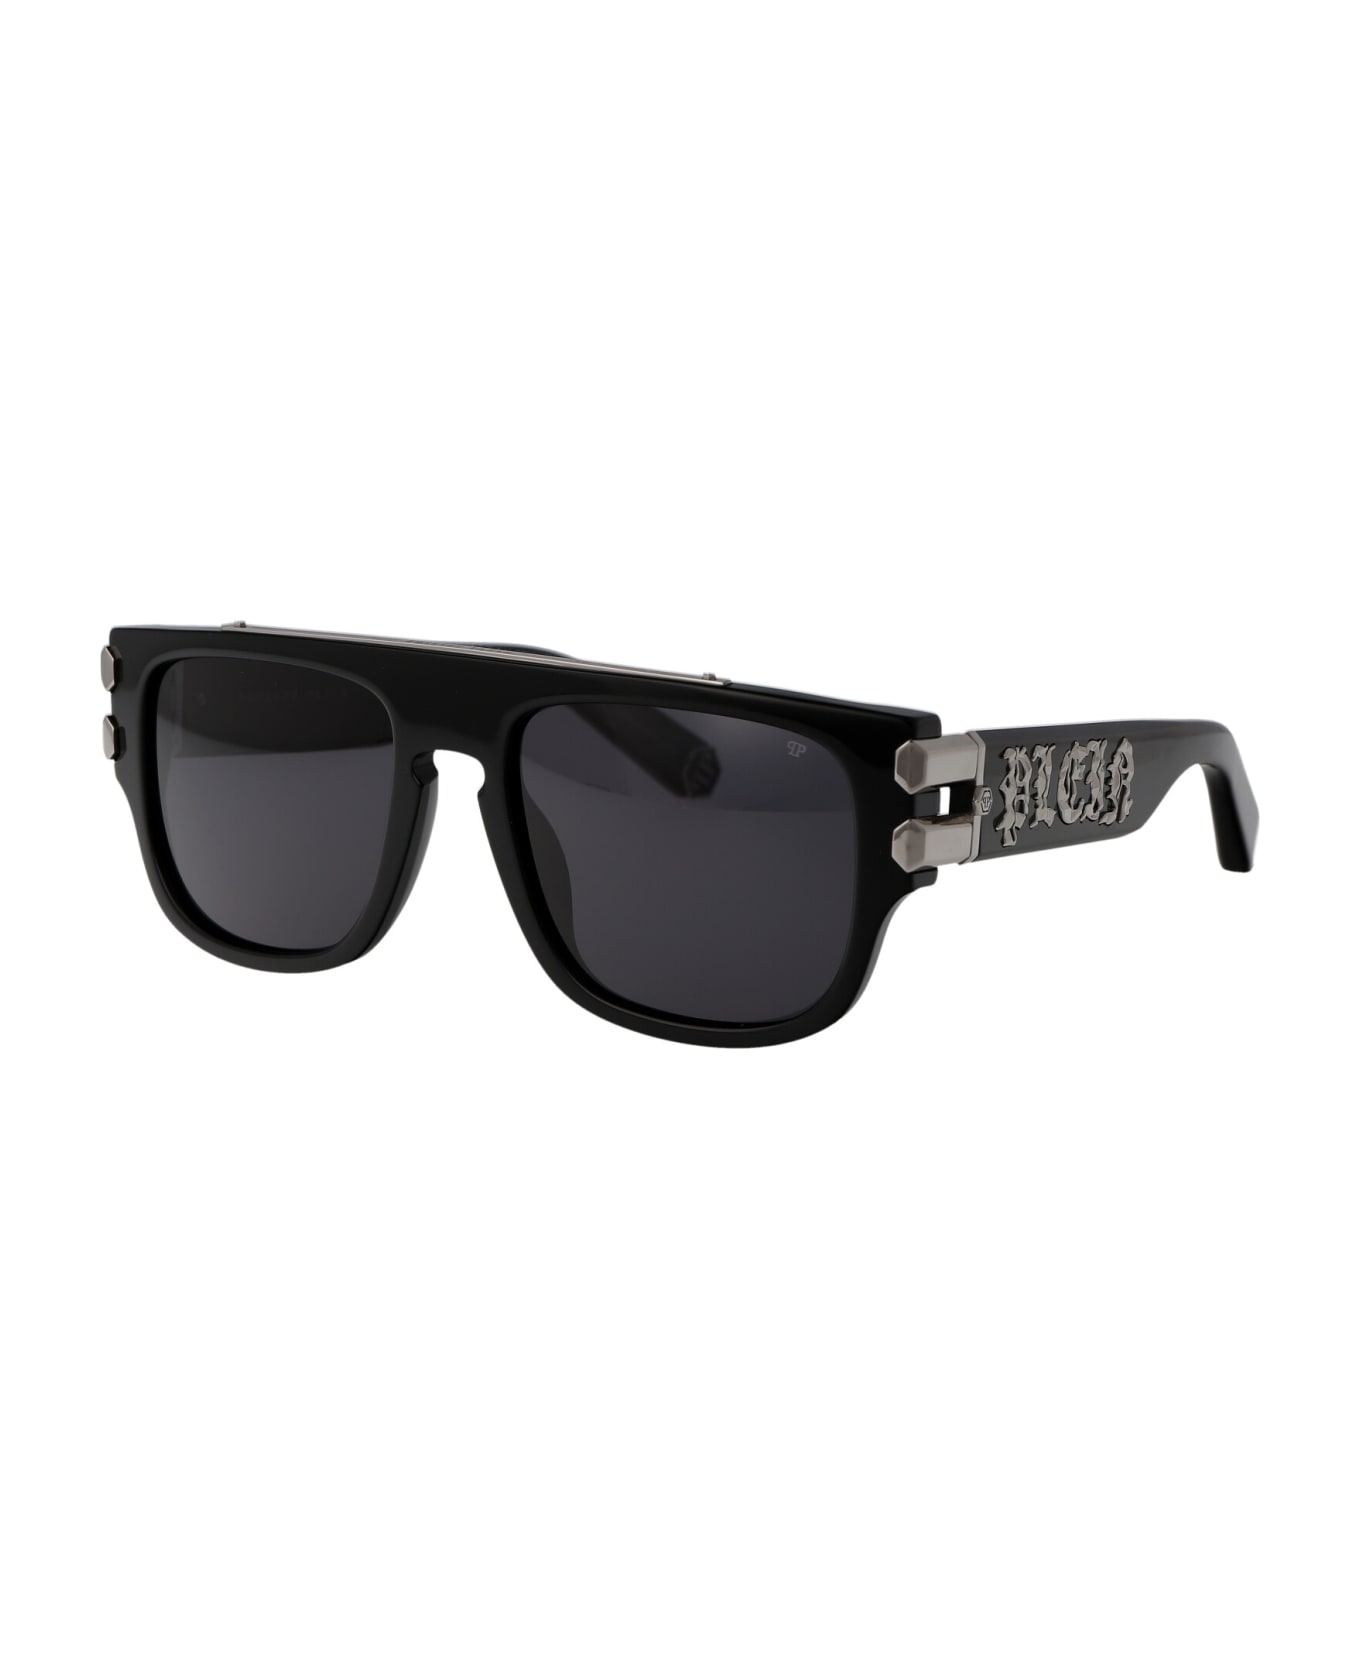 Philipp Plein Spp011x Sunglasses - 0700 BLACK サングラス